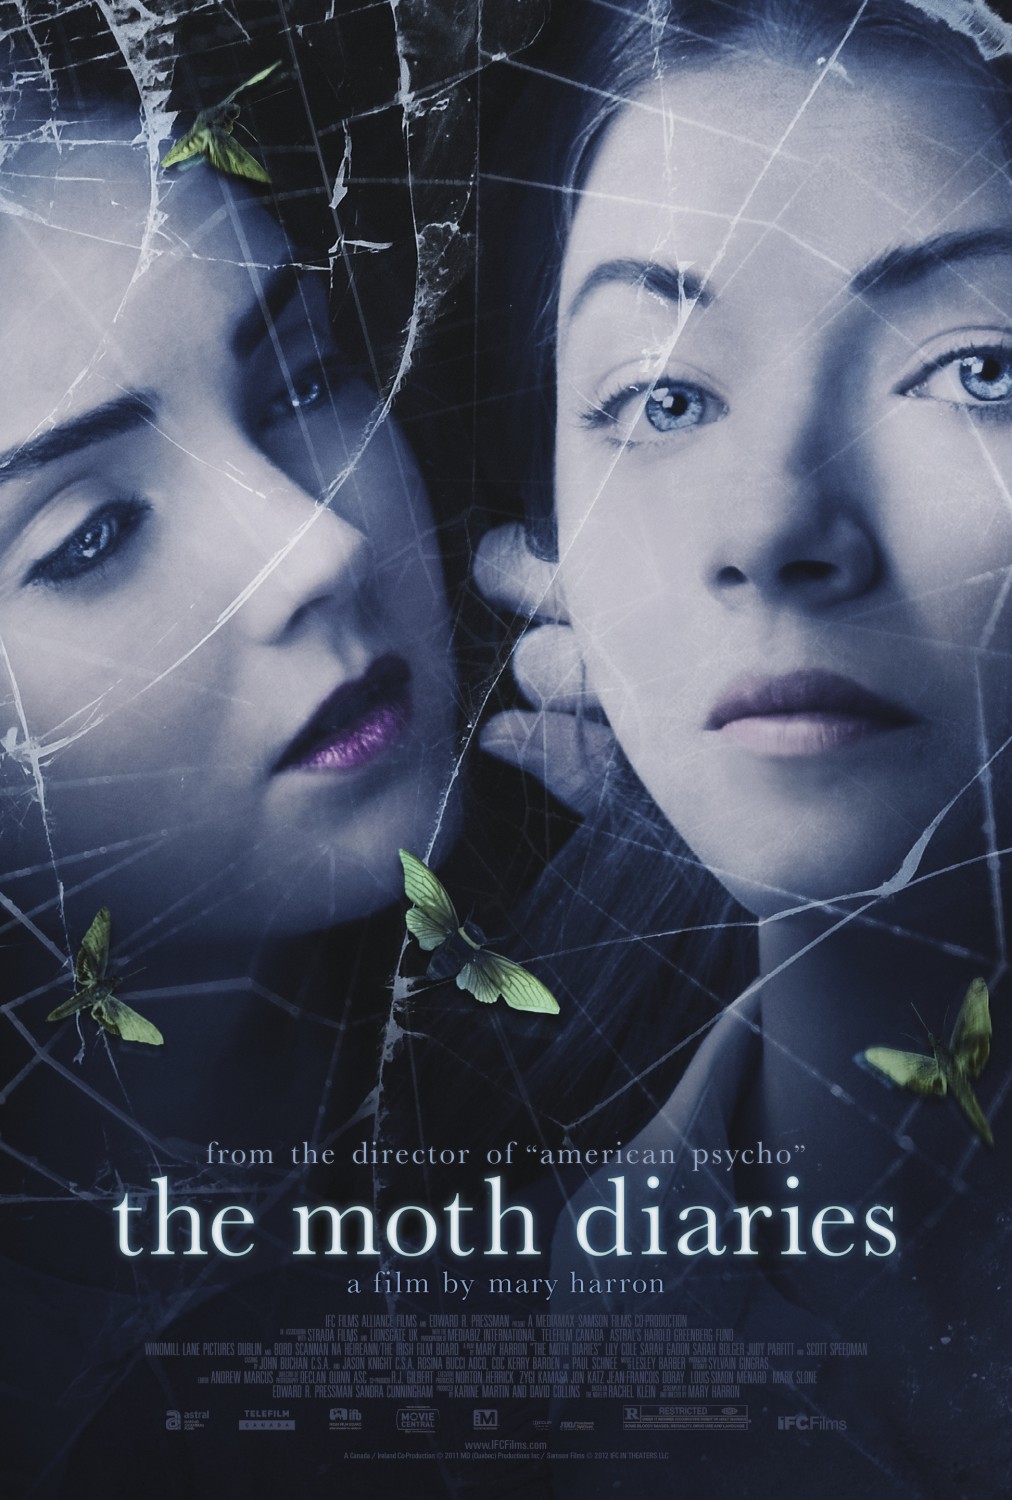 The Moth Diaries by Rachel Klein